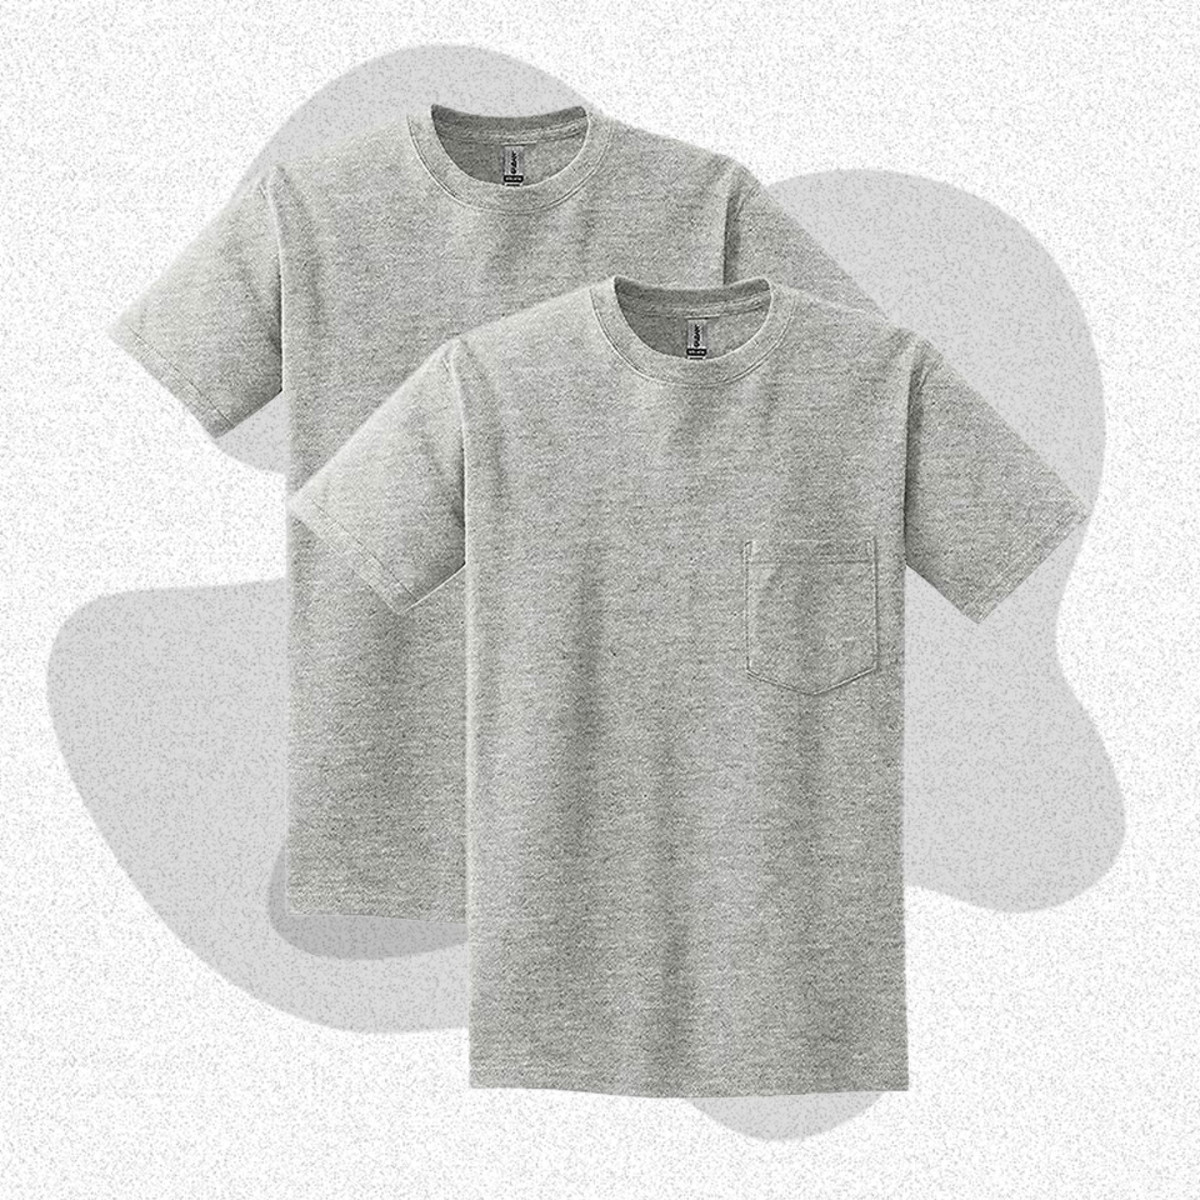 Gildan Men Grey T-Shirts Value Pack Shirts for Men Pack of 6 Pack of 12  Grey Shirts for Men Gildan T-shirts for Men Gray T-shirt Casual Shirt Basic